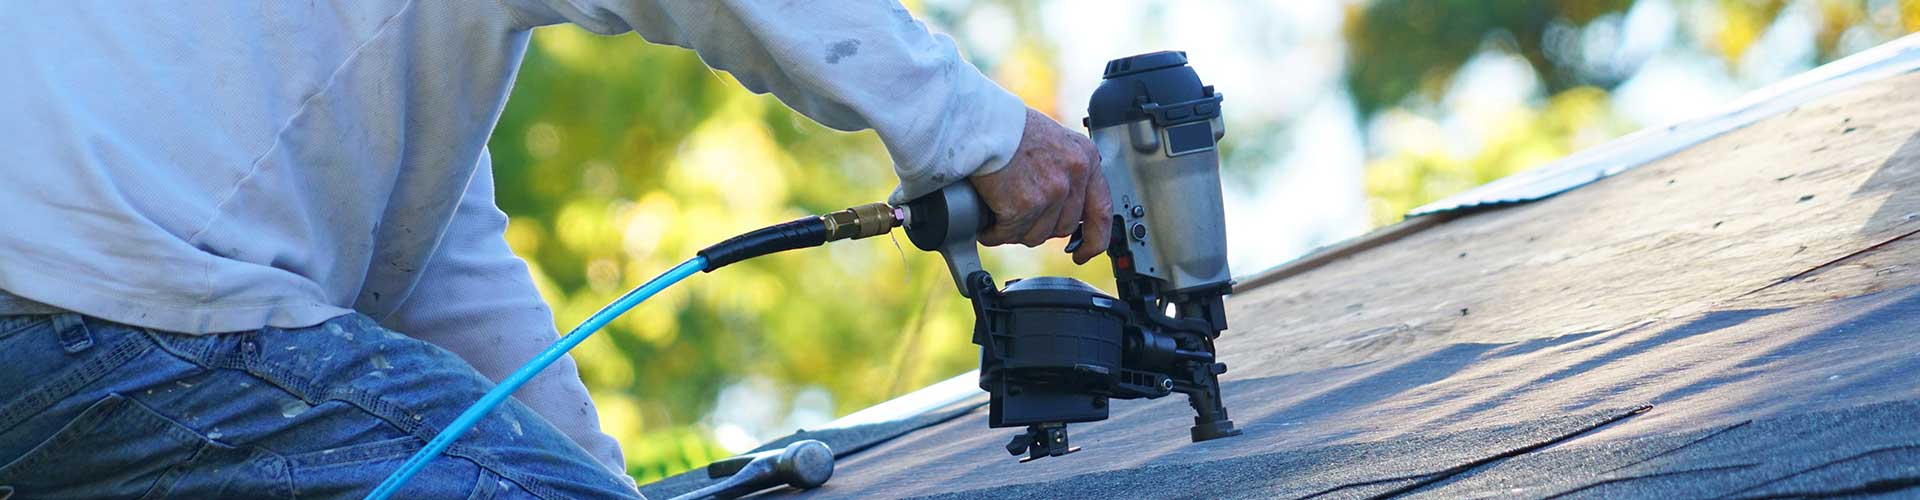 Handyman Using Nail Gun To Install Shingle To Repair Roof